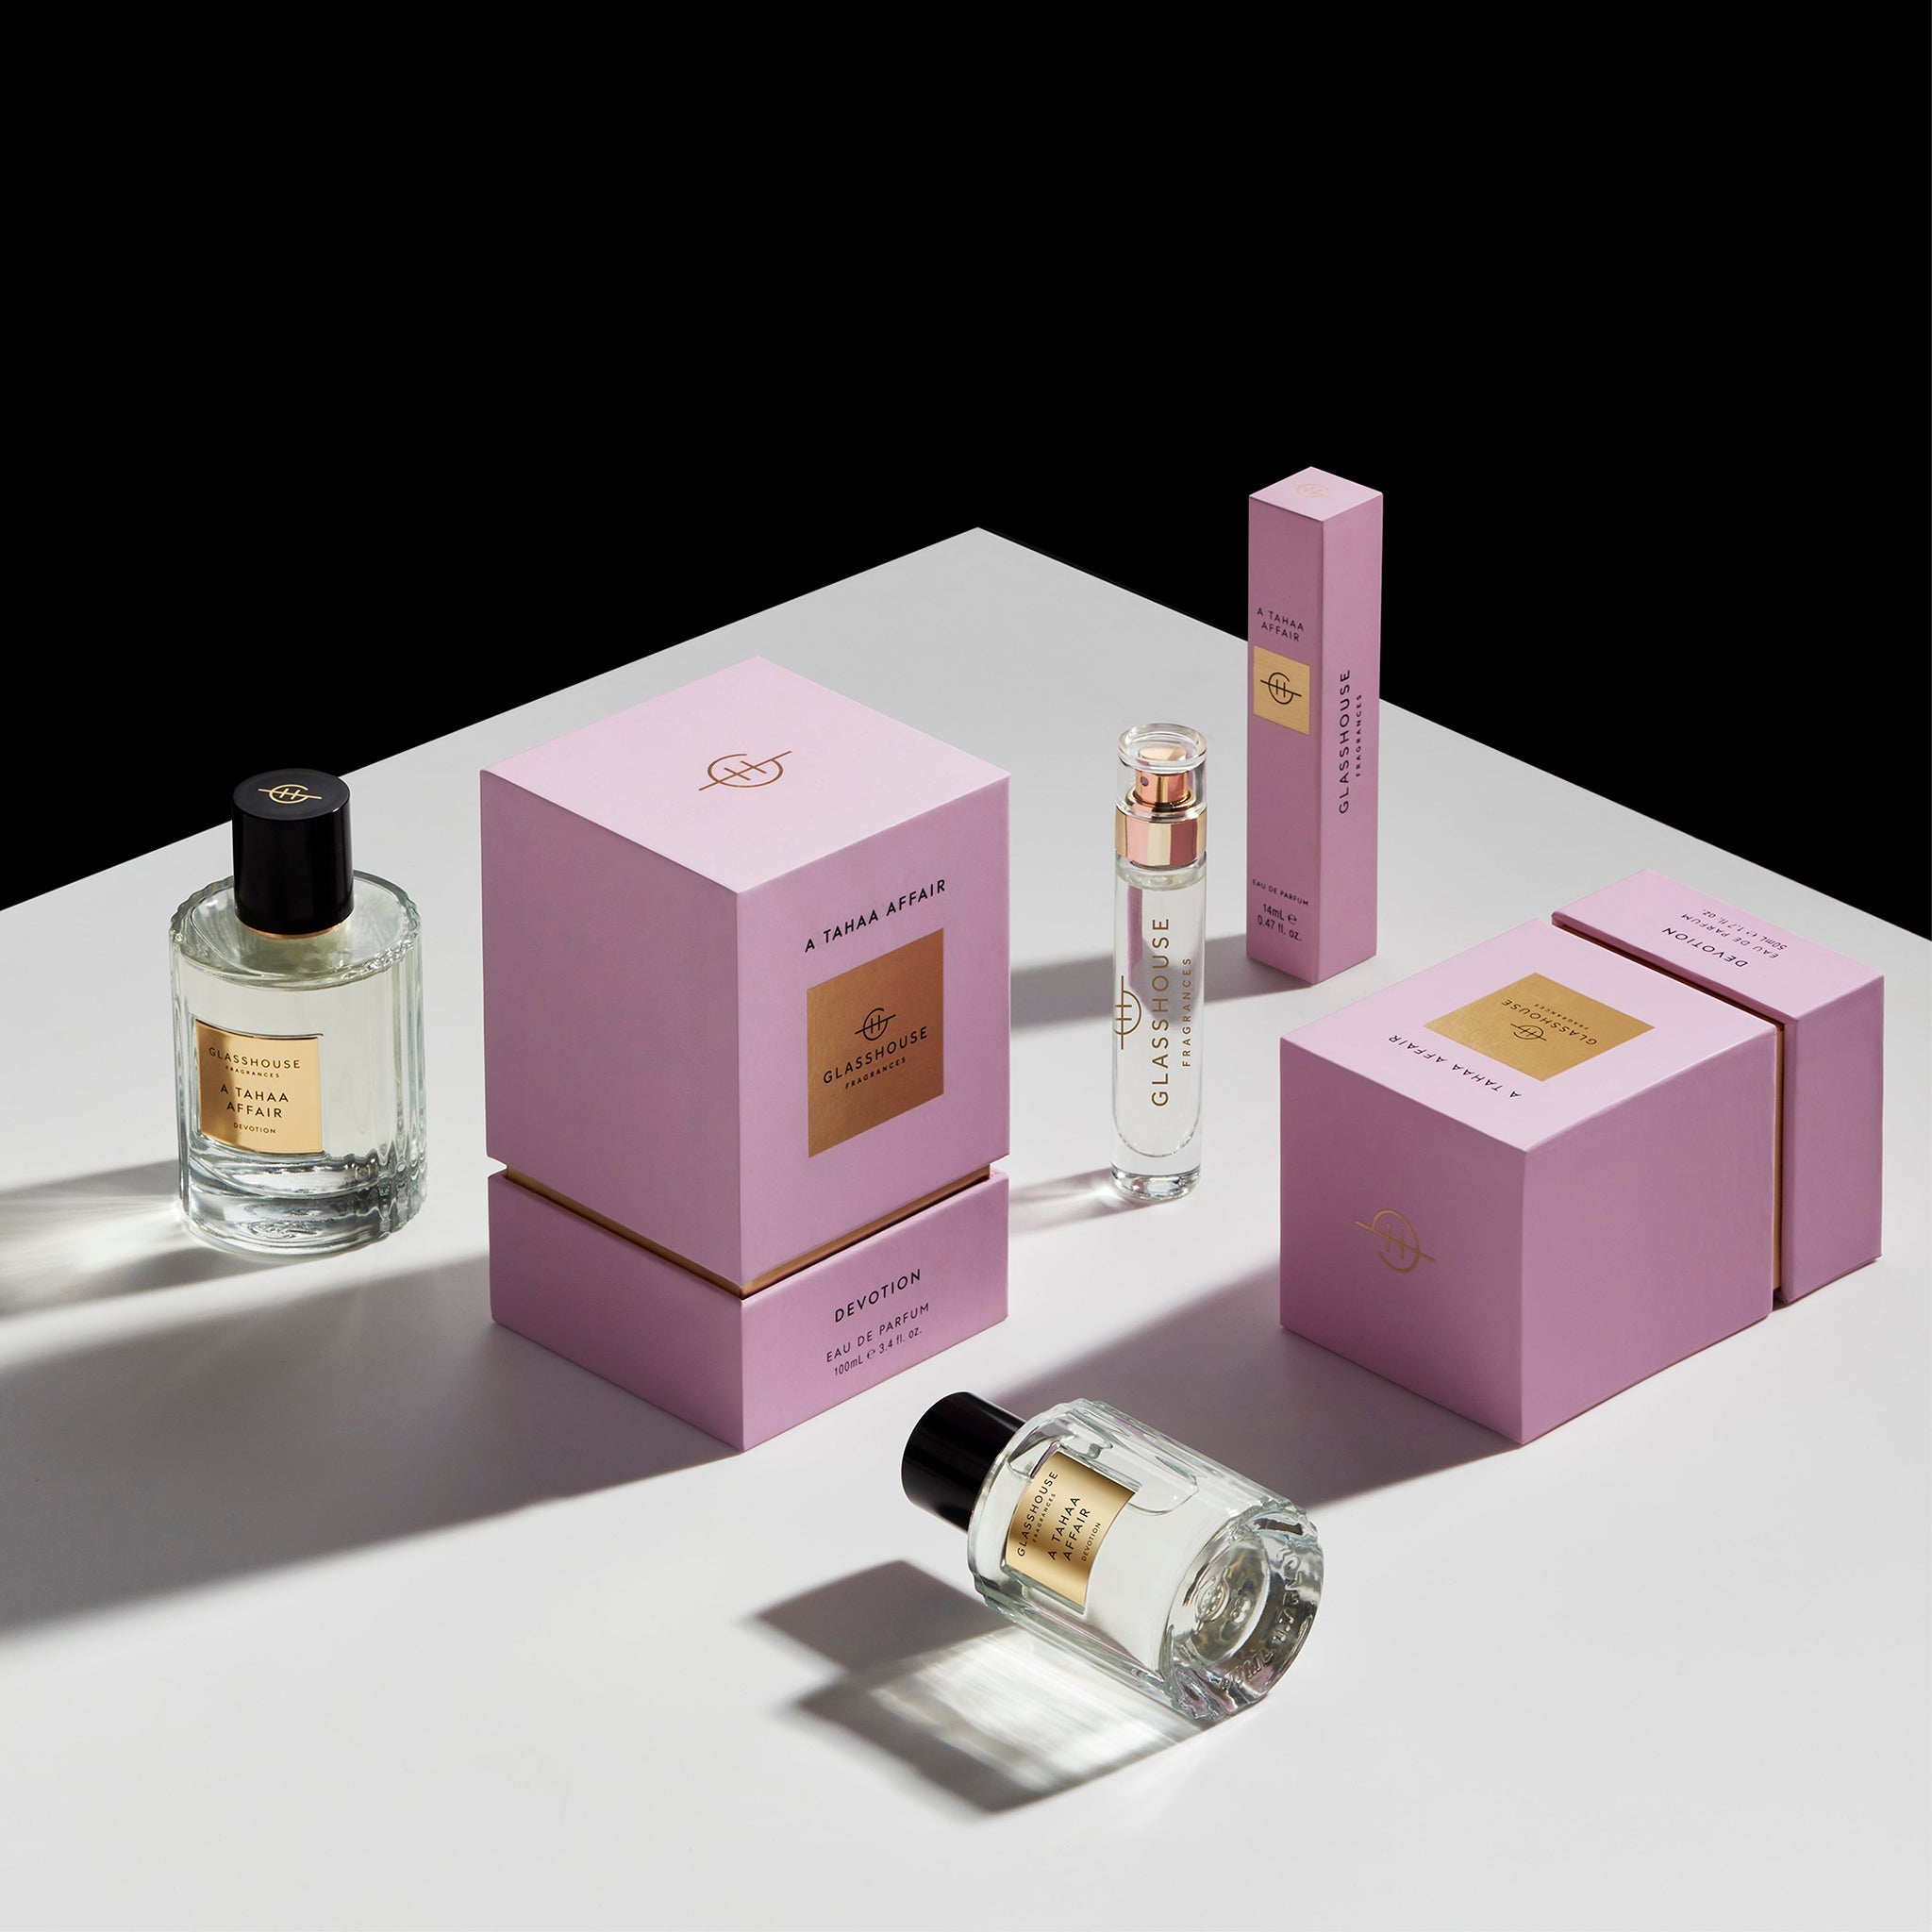 Glasshouse Fragrances A Tahaa Affair Vanilla Caramel Eau de Parfum Various Size Sprays with boxes - tabletop product shot